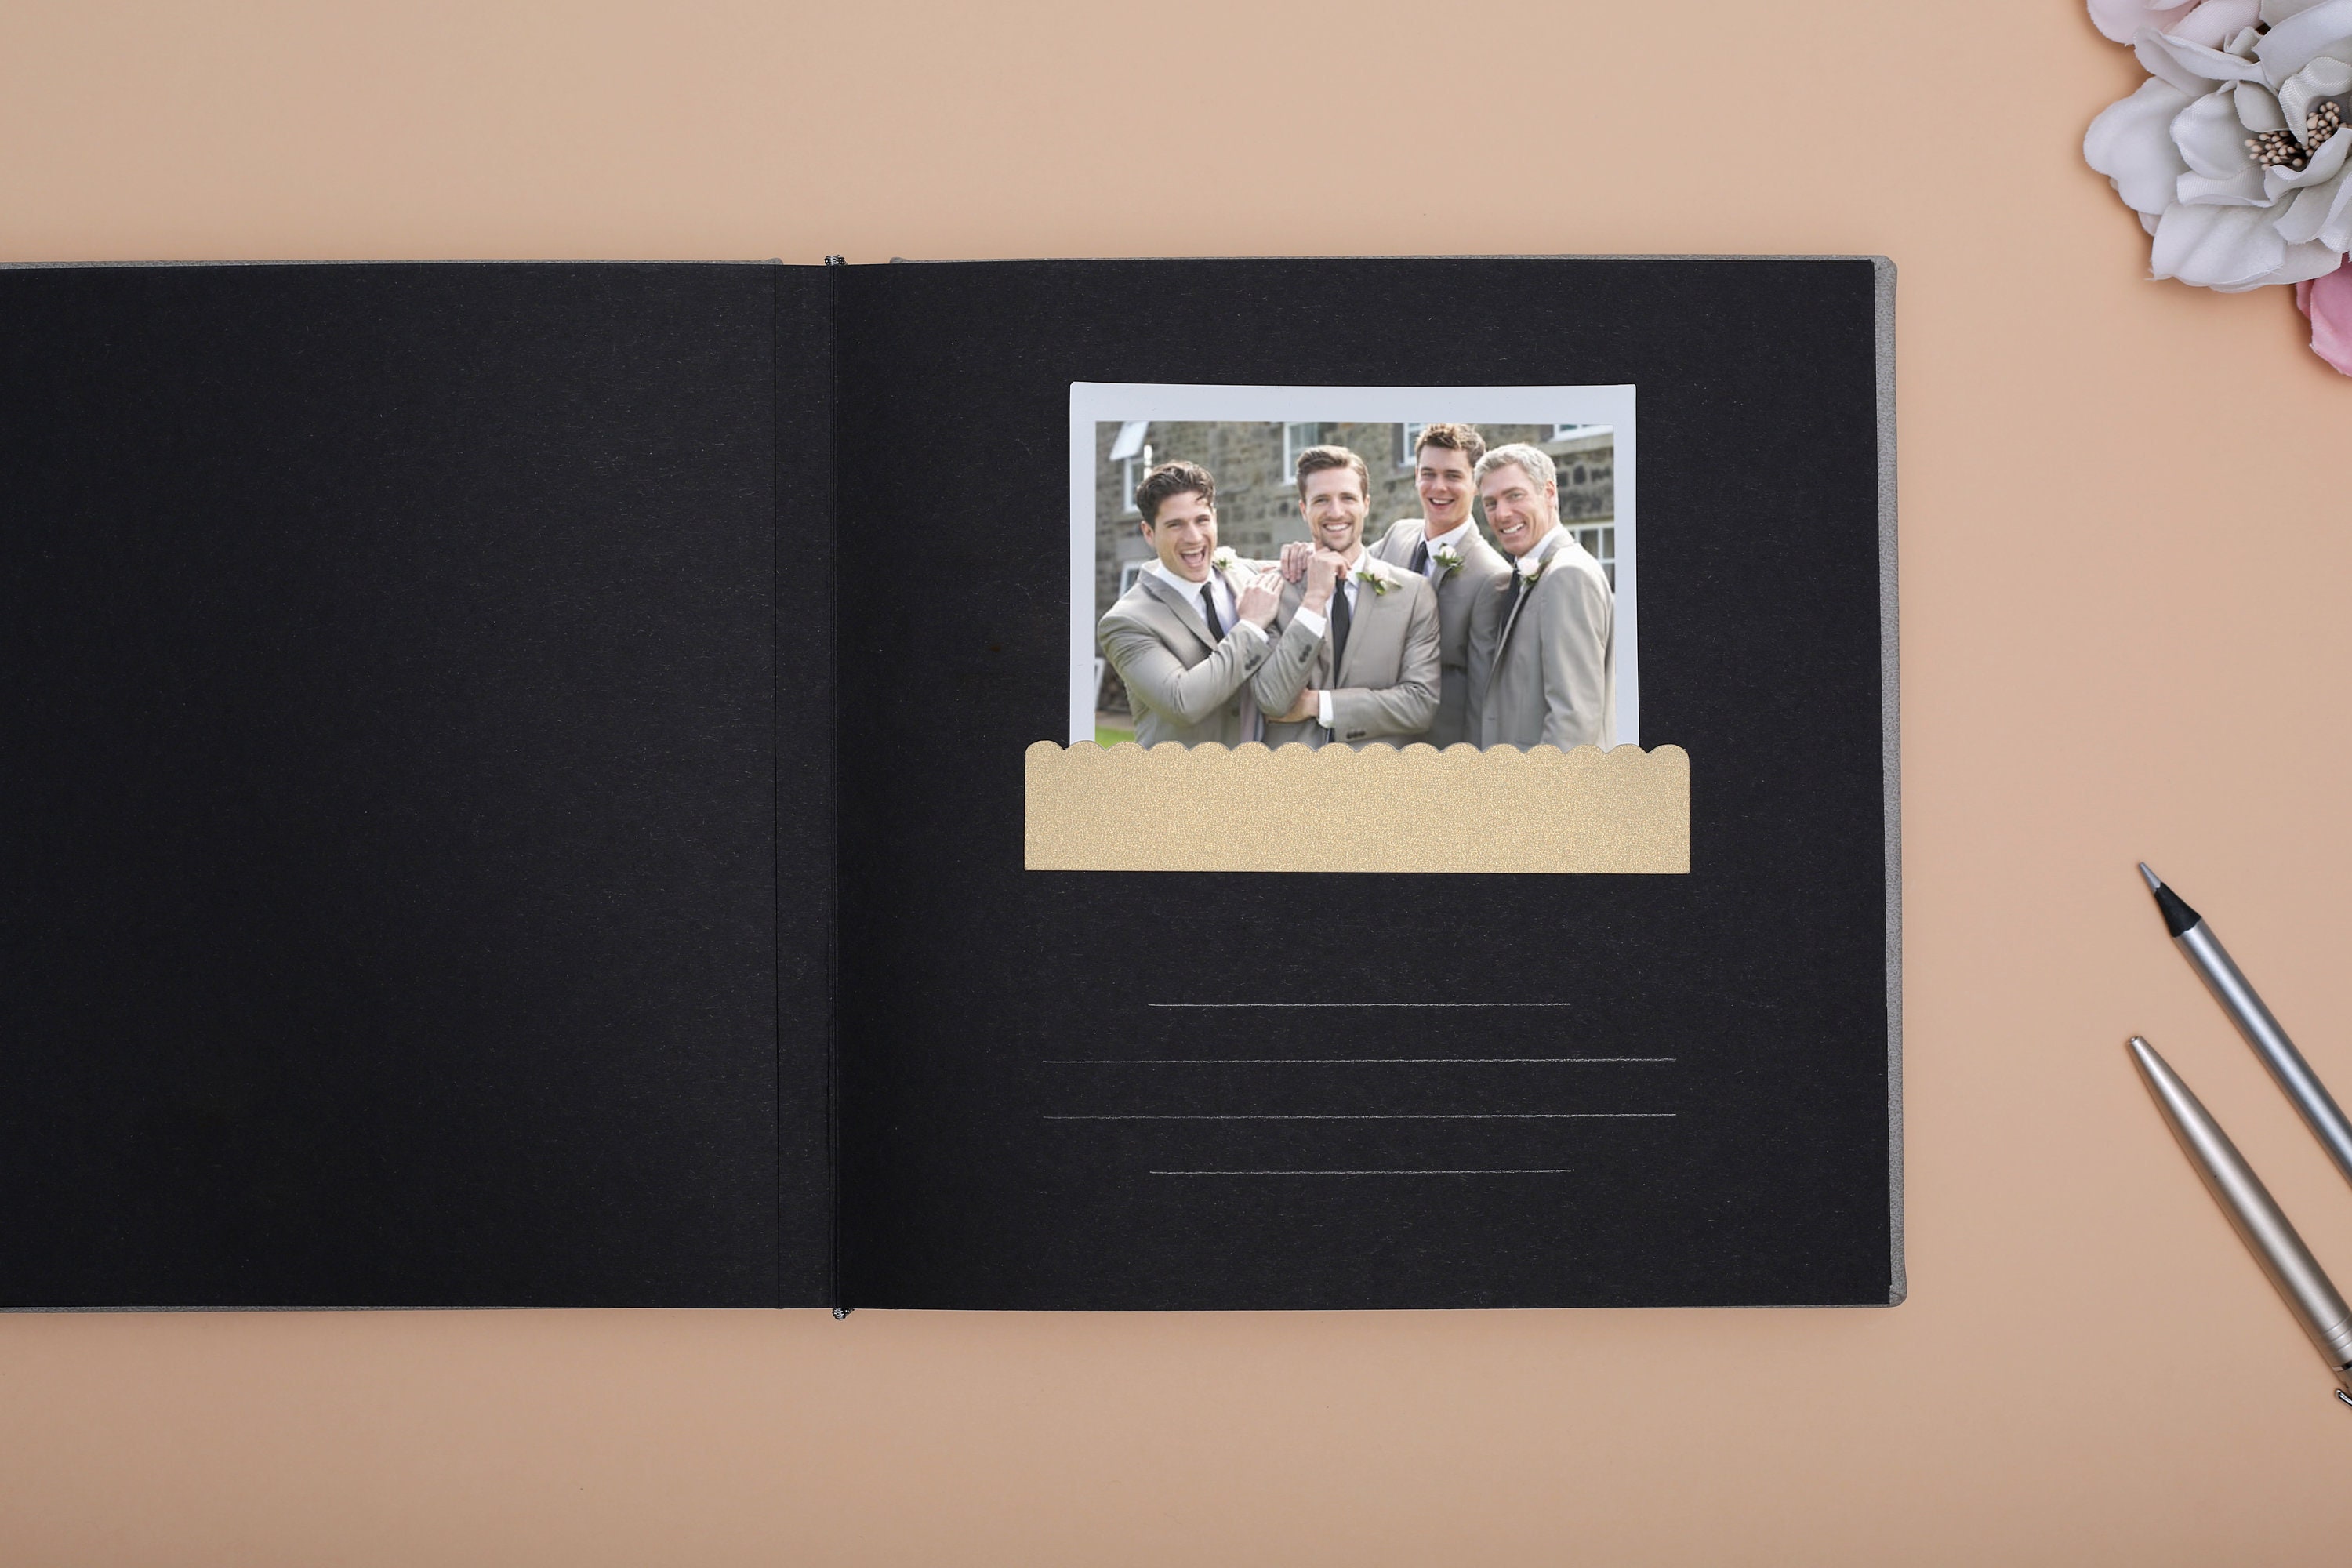 Pocket Photo Albums 4x6. Photo Memory Book. Family Photo Album. Instax  Photo Book. Photo Album Book. Wedding Albums. Baby Photo Album 